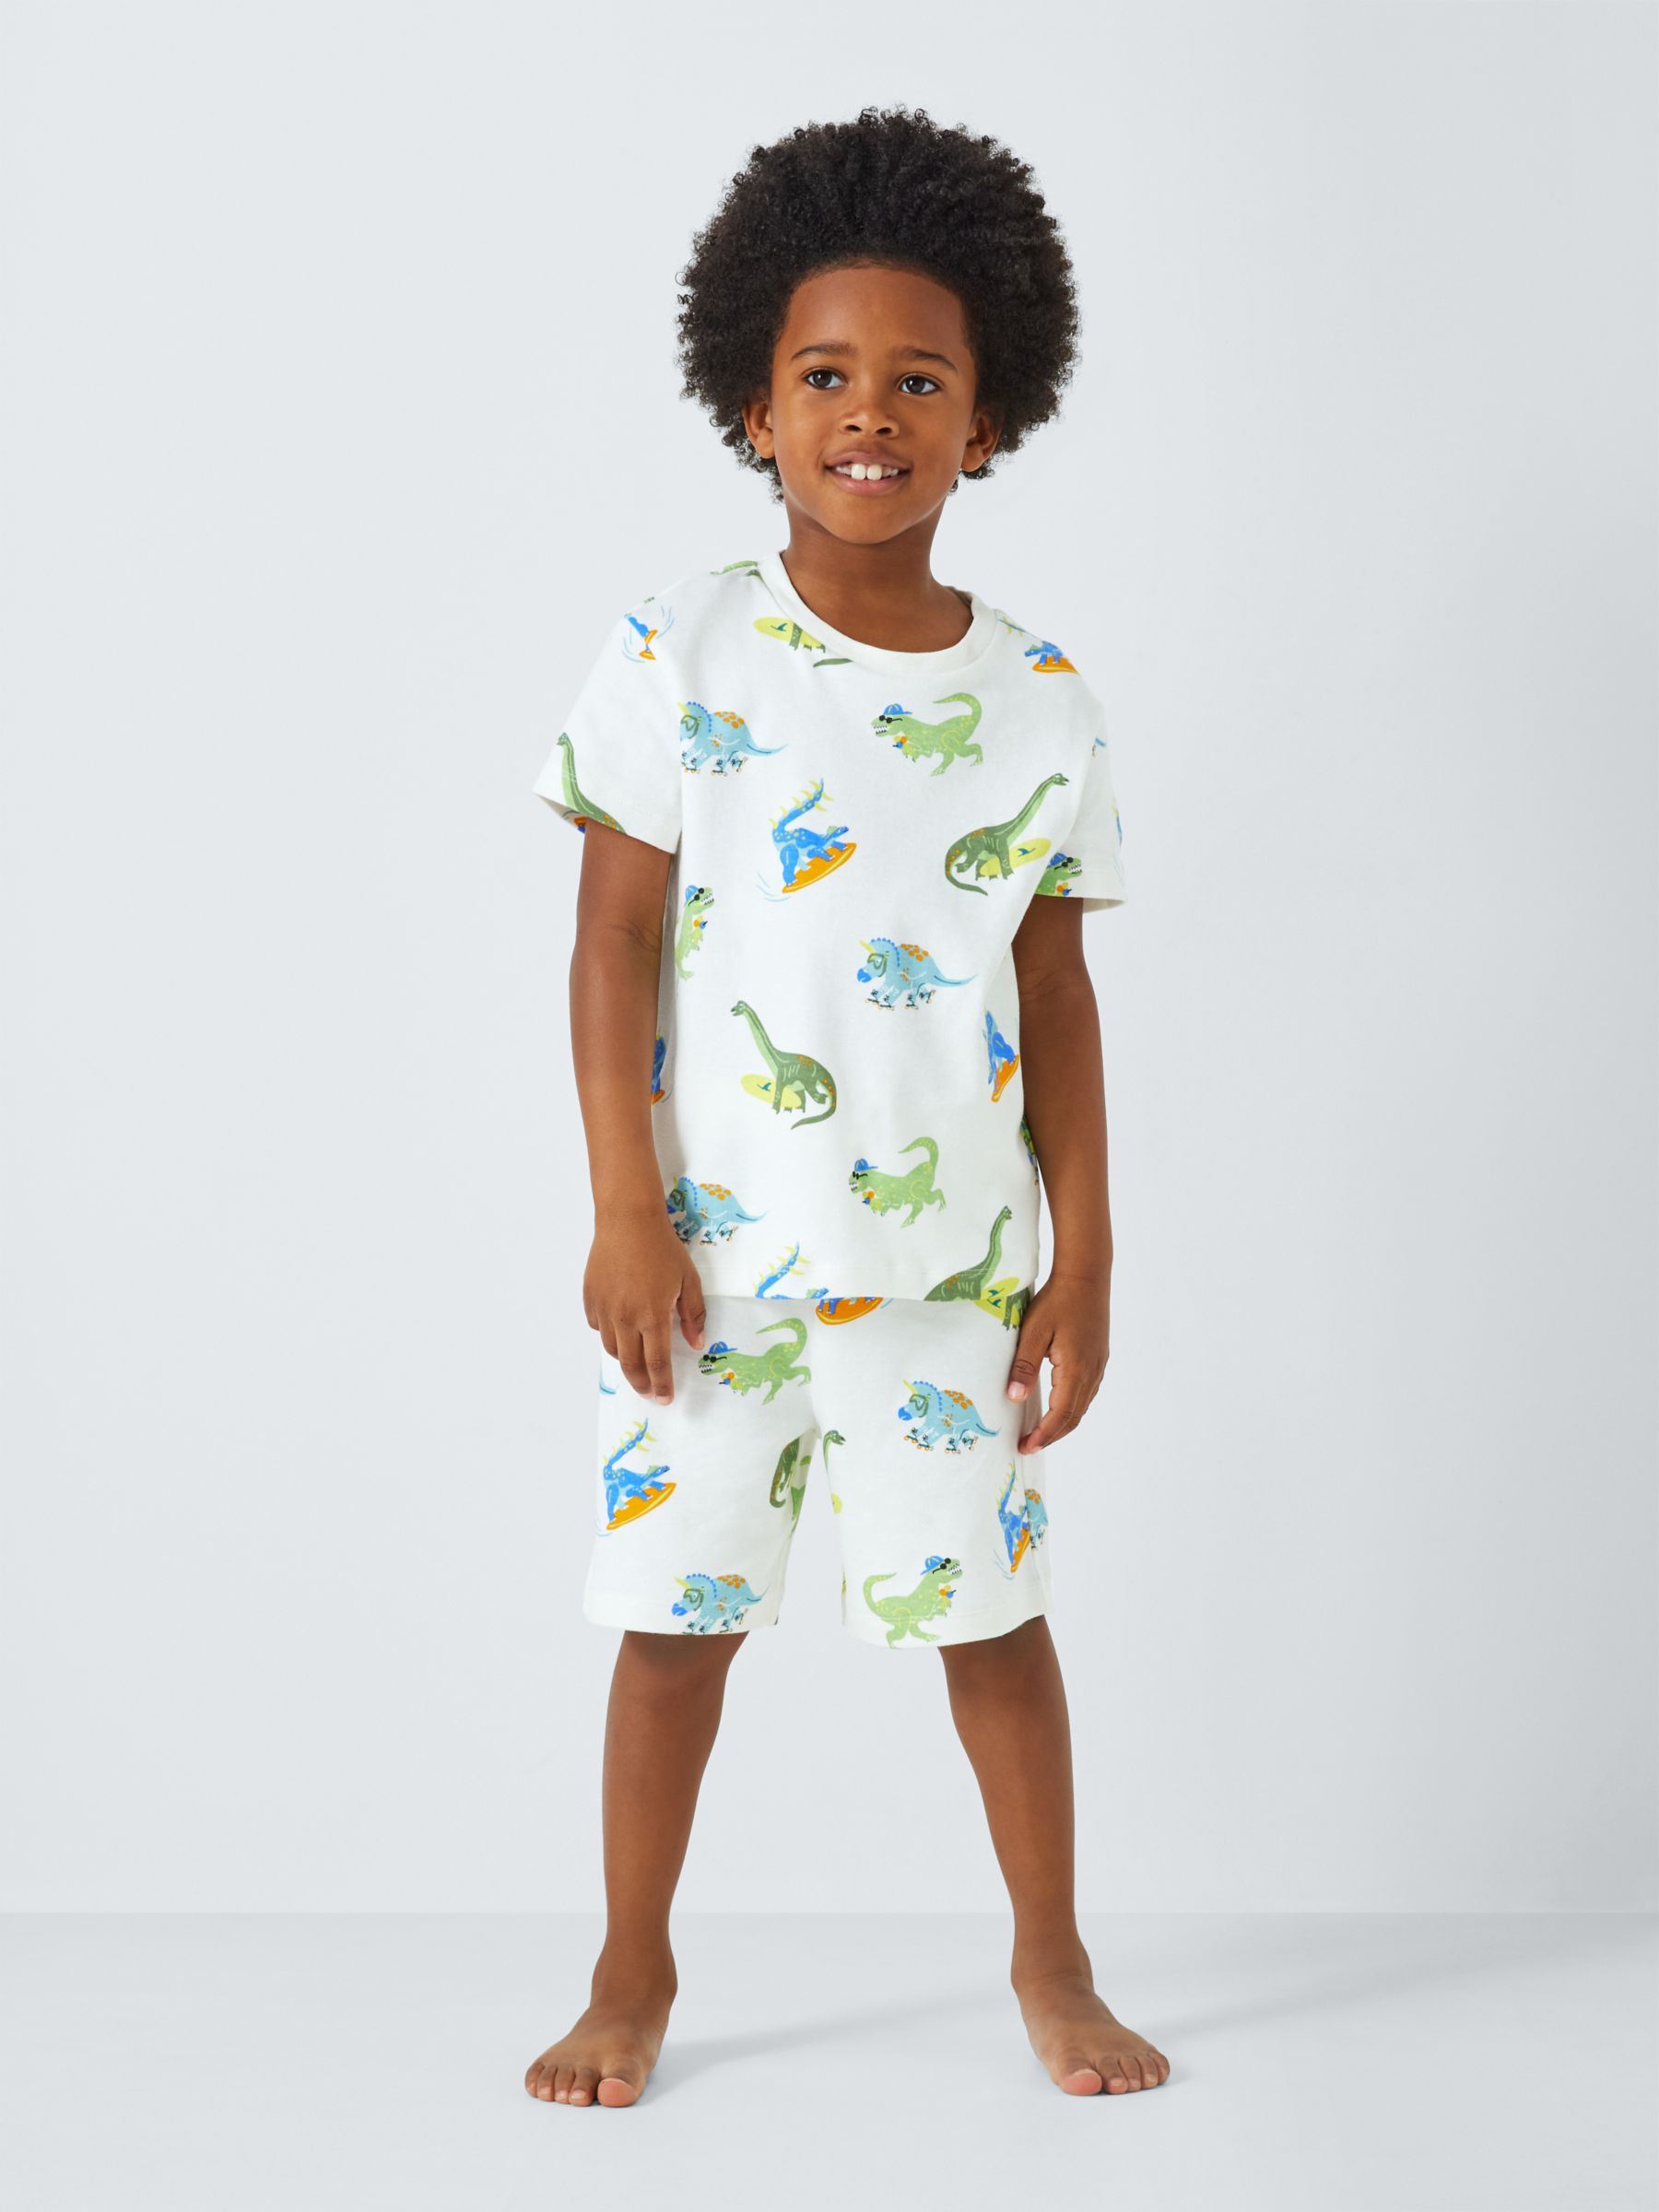 John Lewis Kids' Summer Plain/Dinosaur Short Pyjama Sets, Pack of 2, Multi, 7 years